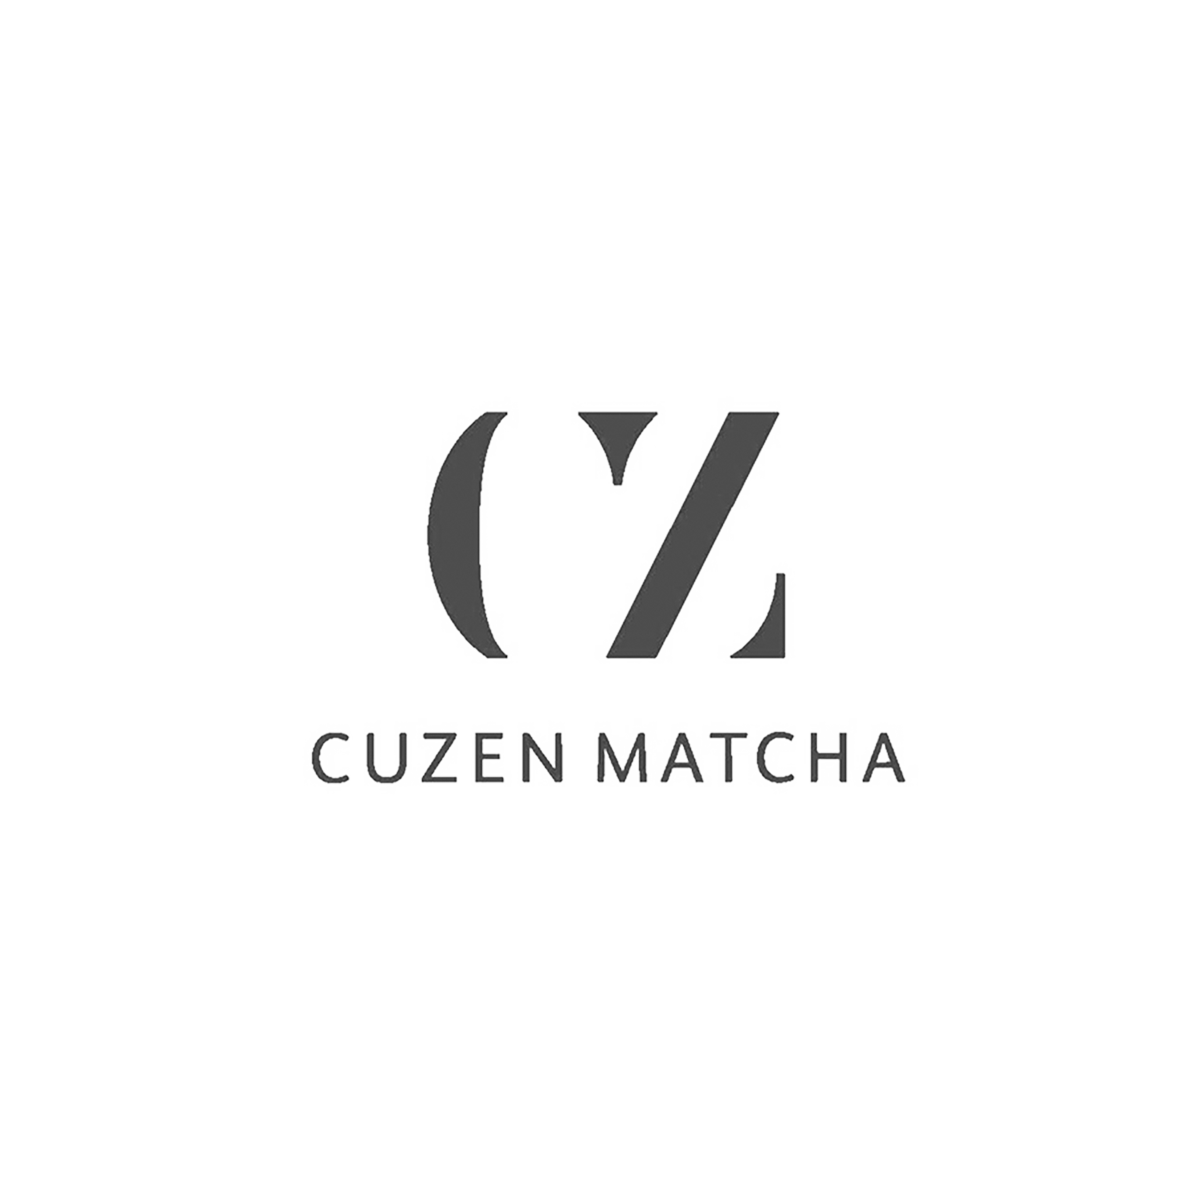 Cuzen Matcha grayscale.png